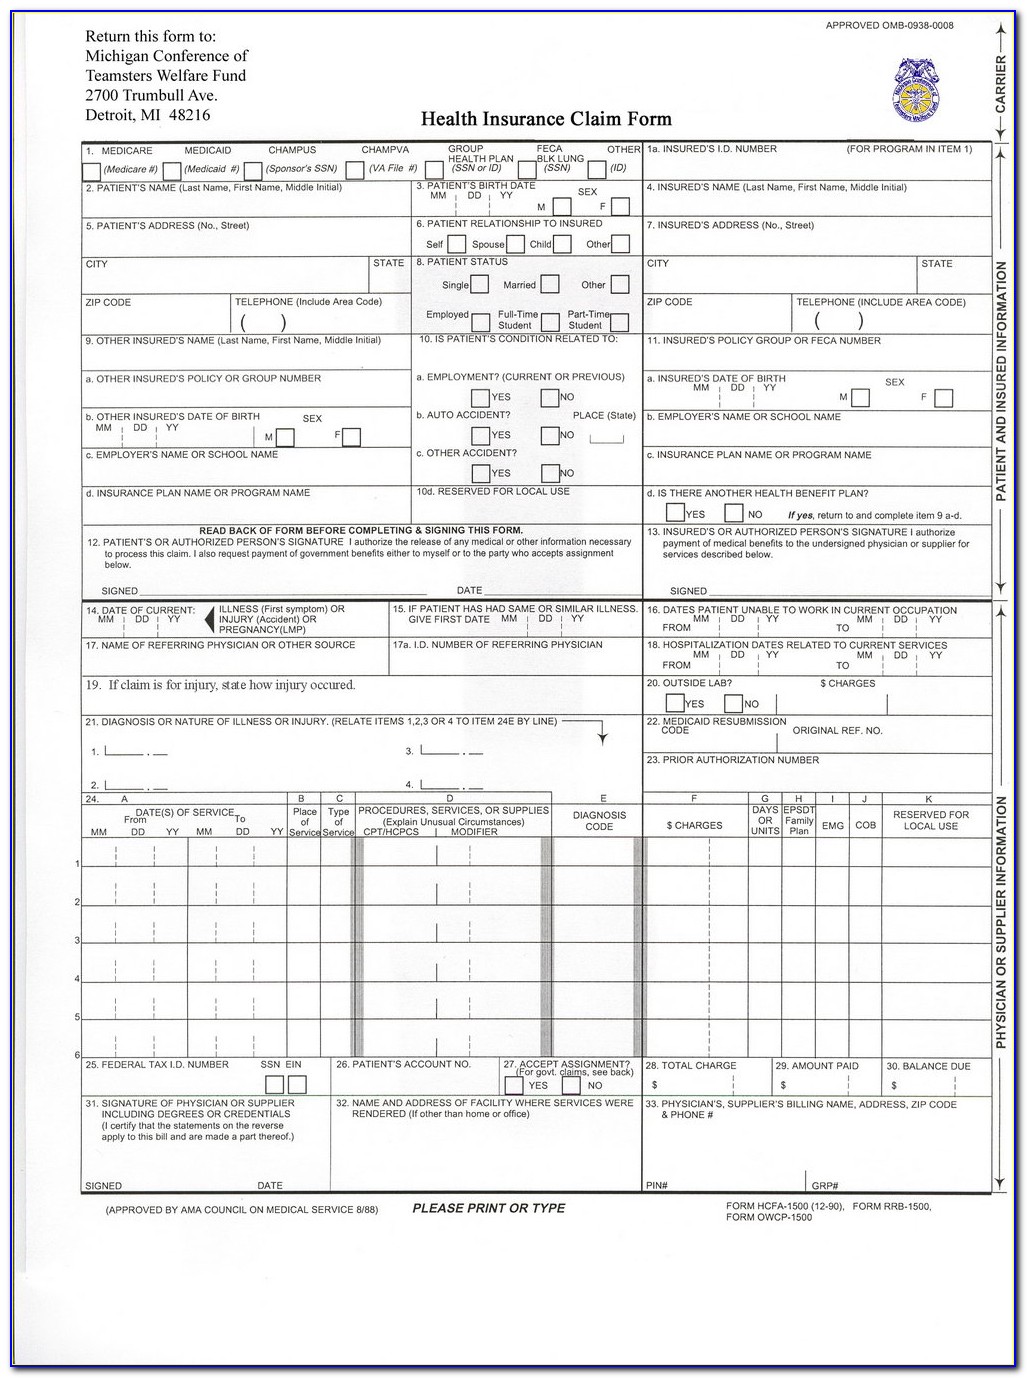 Health Insurance Claim Form 1500 Sample